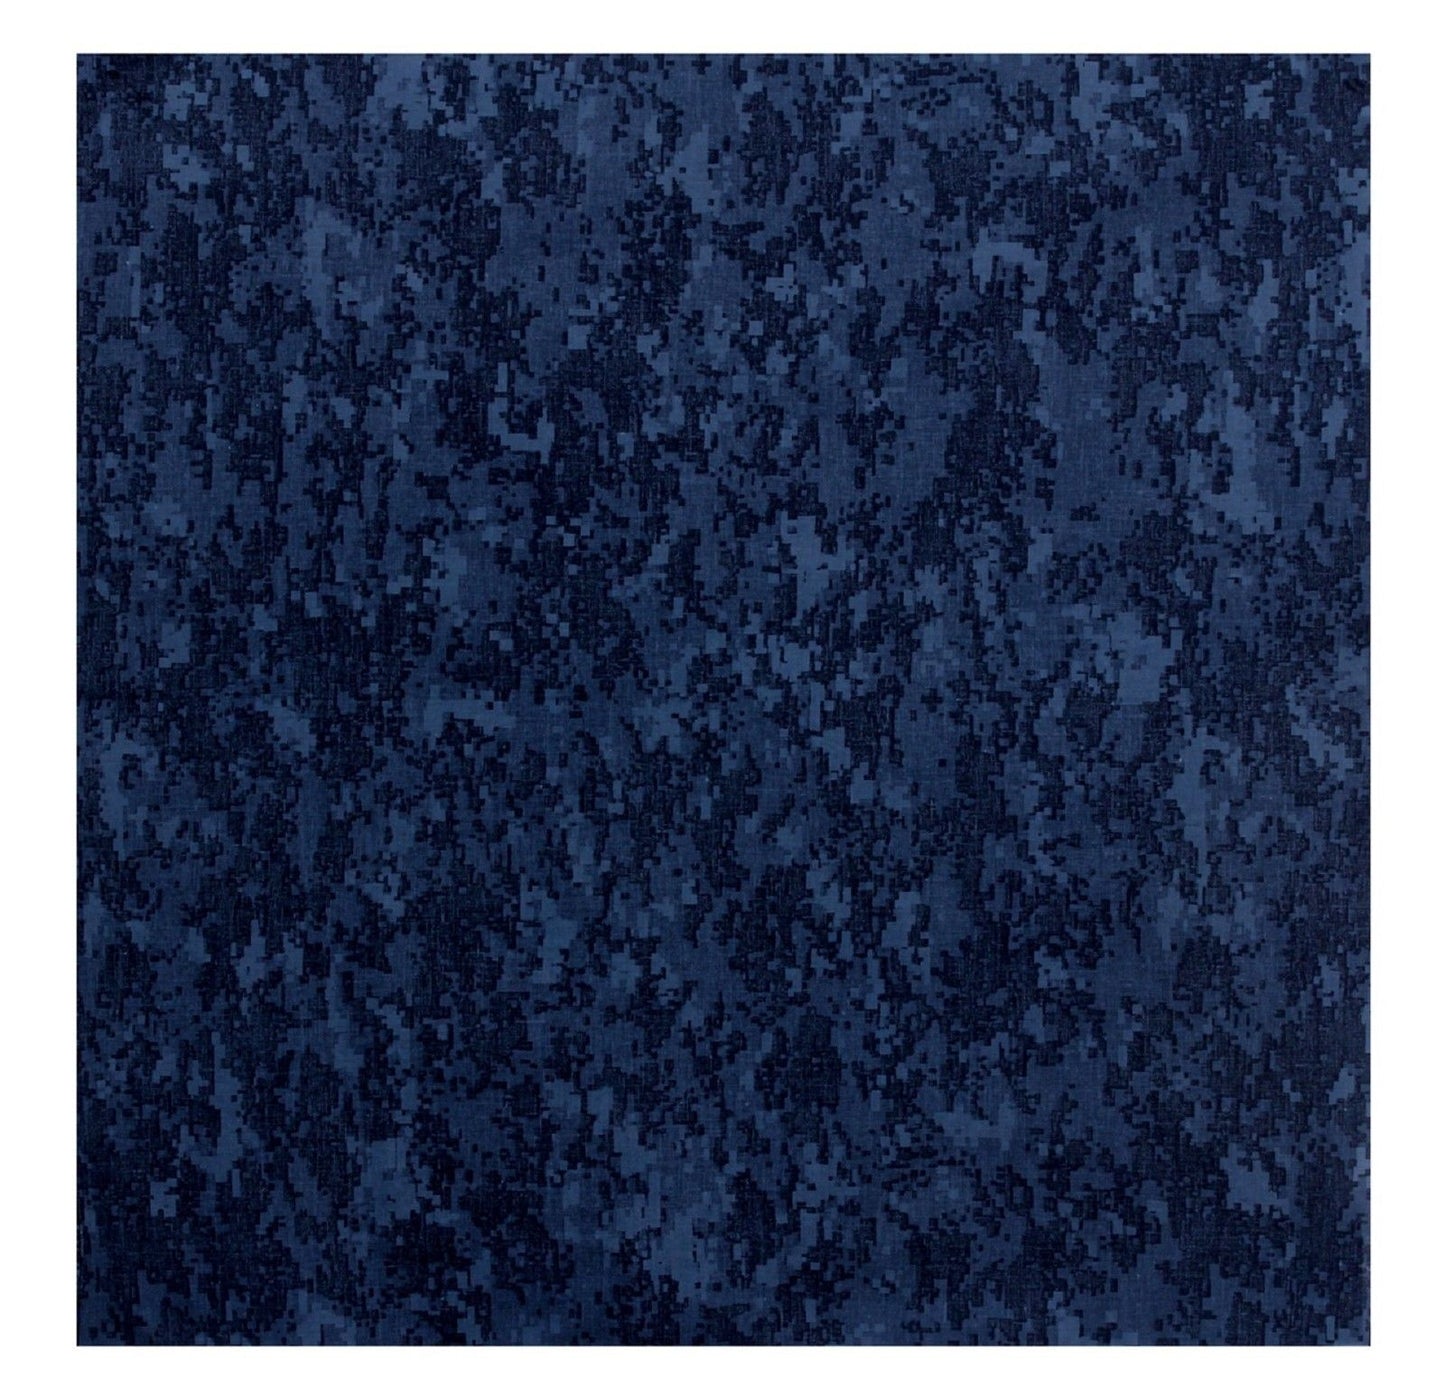 Midnight Blue & Black Digital Camo Bandana - Cotton 22" Digi Camouflage Bandanas